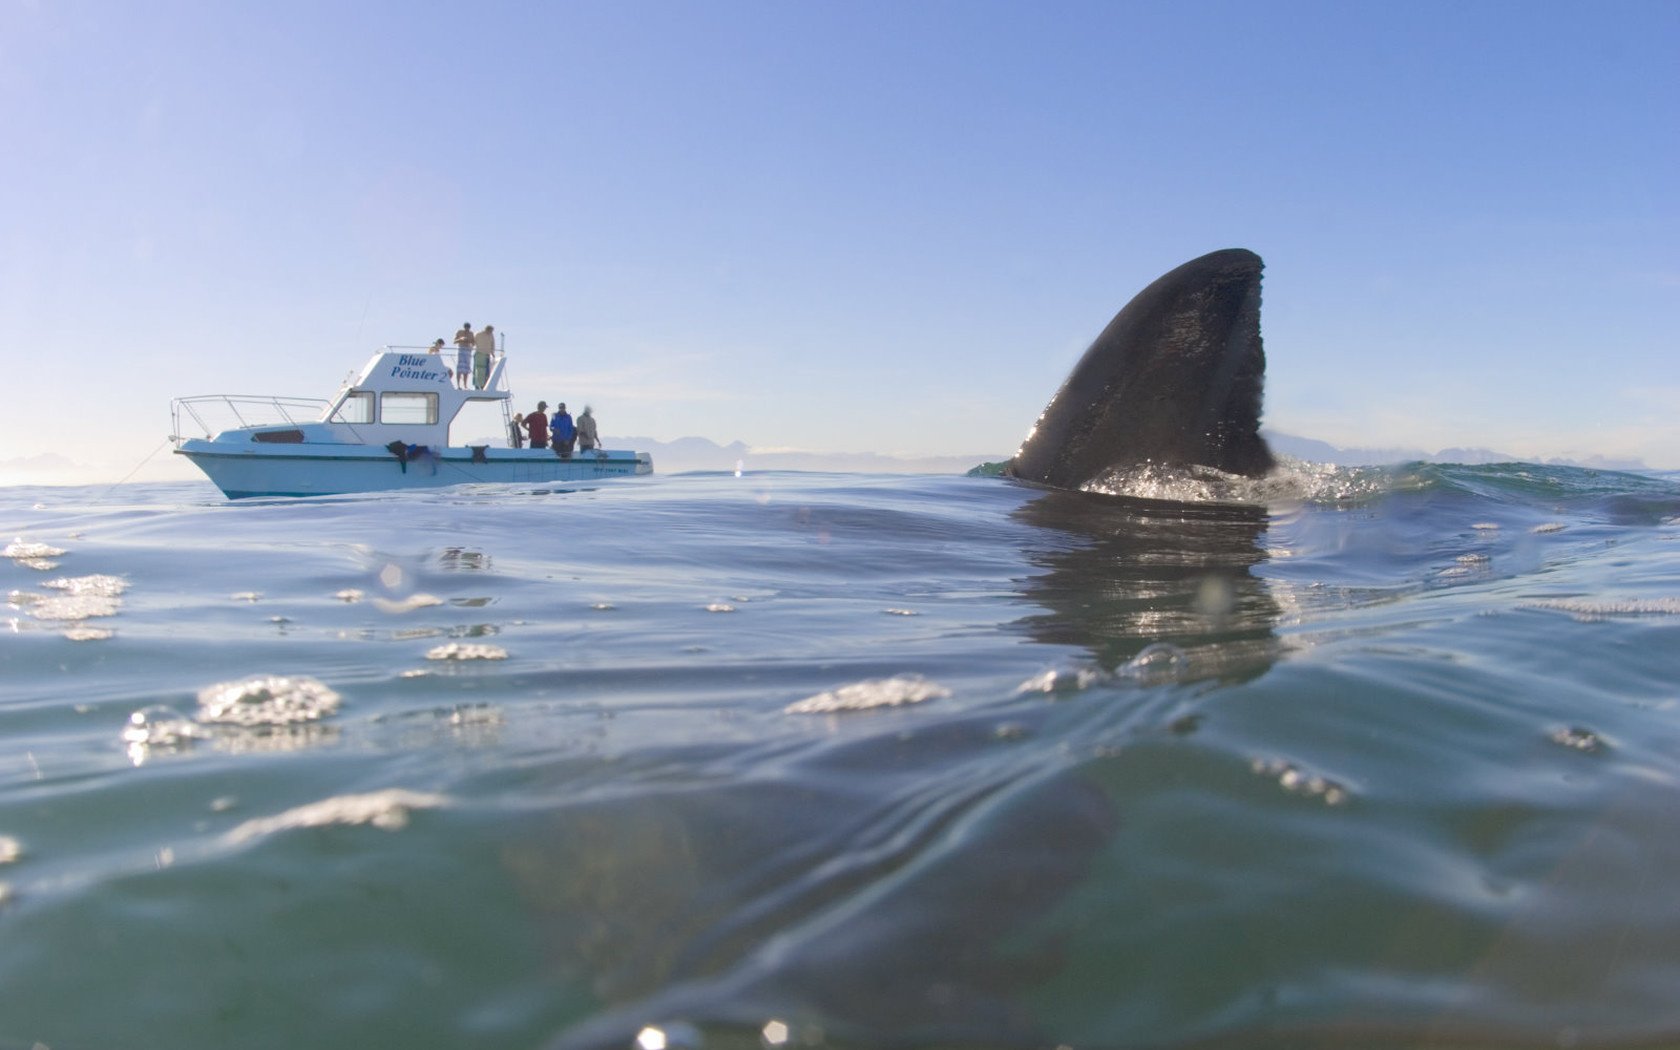 Вода кишит акулами туристы отдыхают на яхте